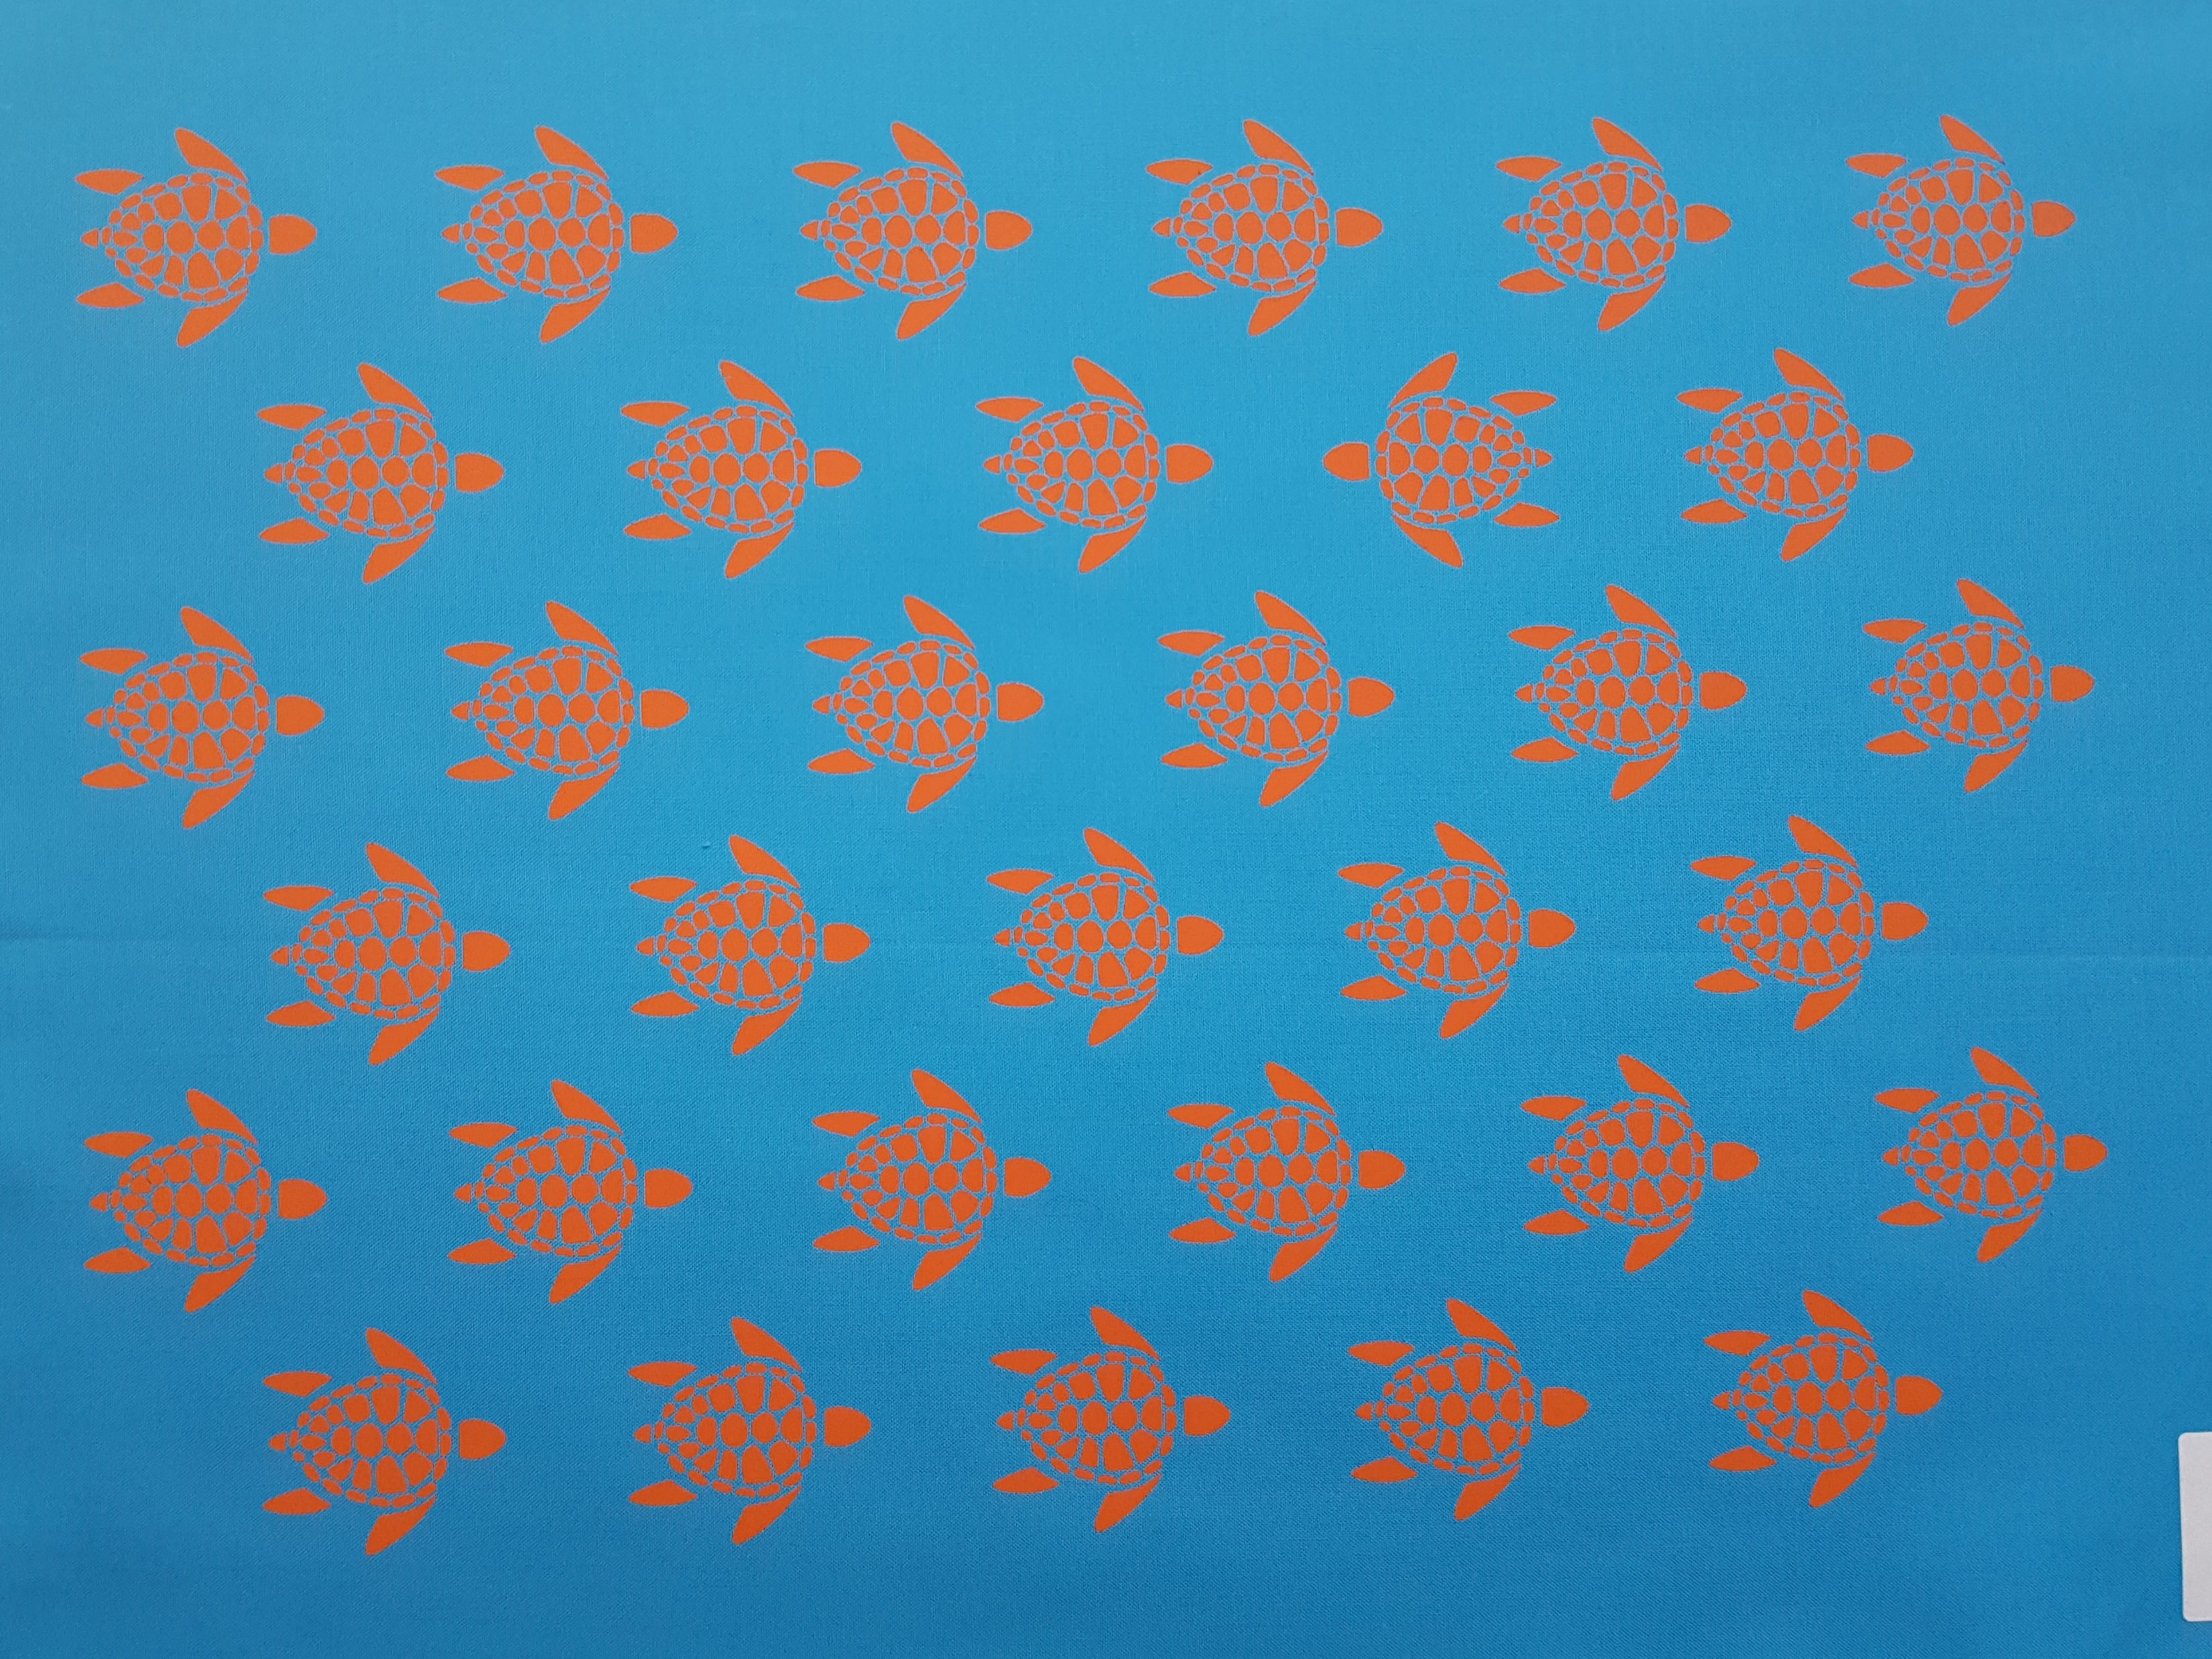 SEA TURTLES - Screen Printed Fabric Kona Cotton Panels - Sea Turtle